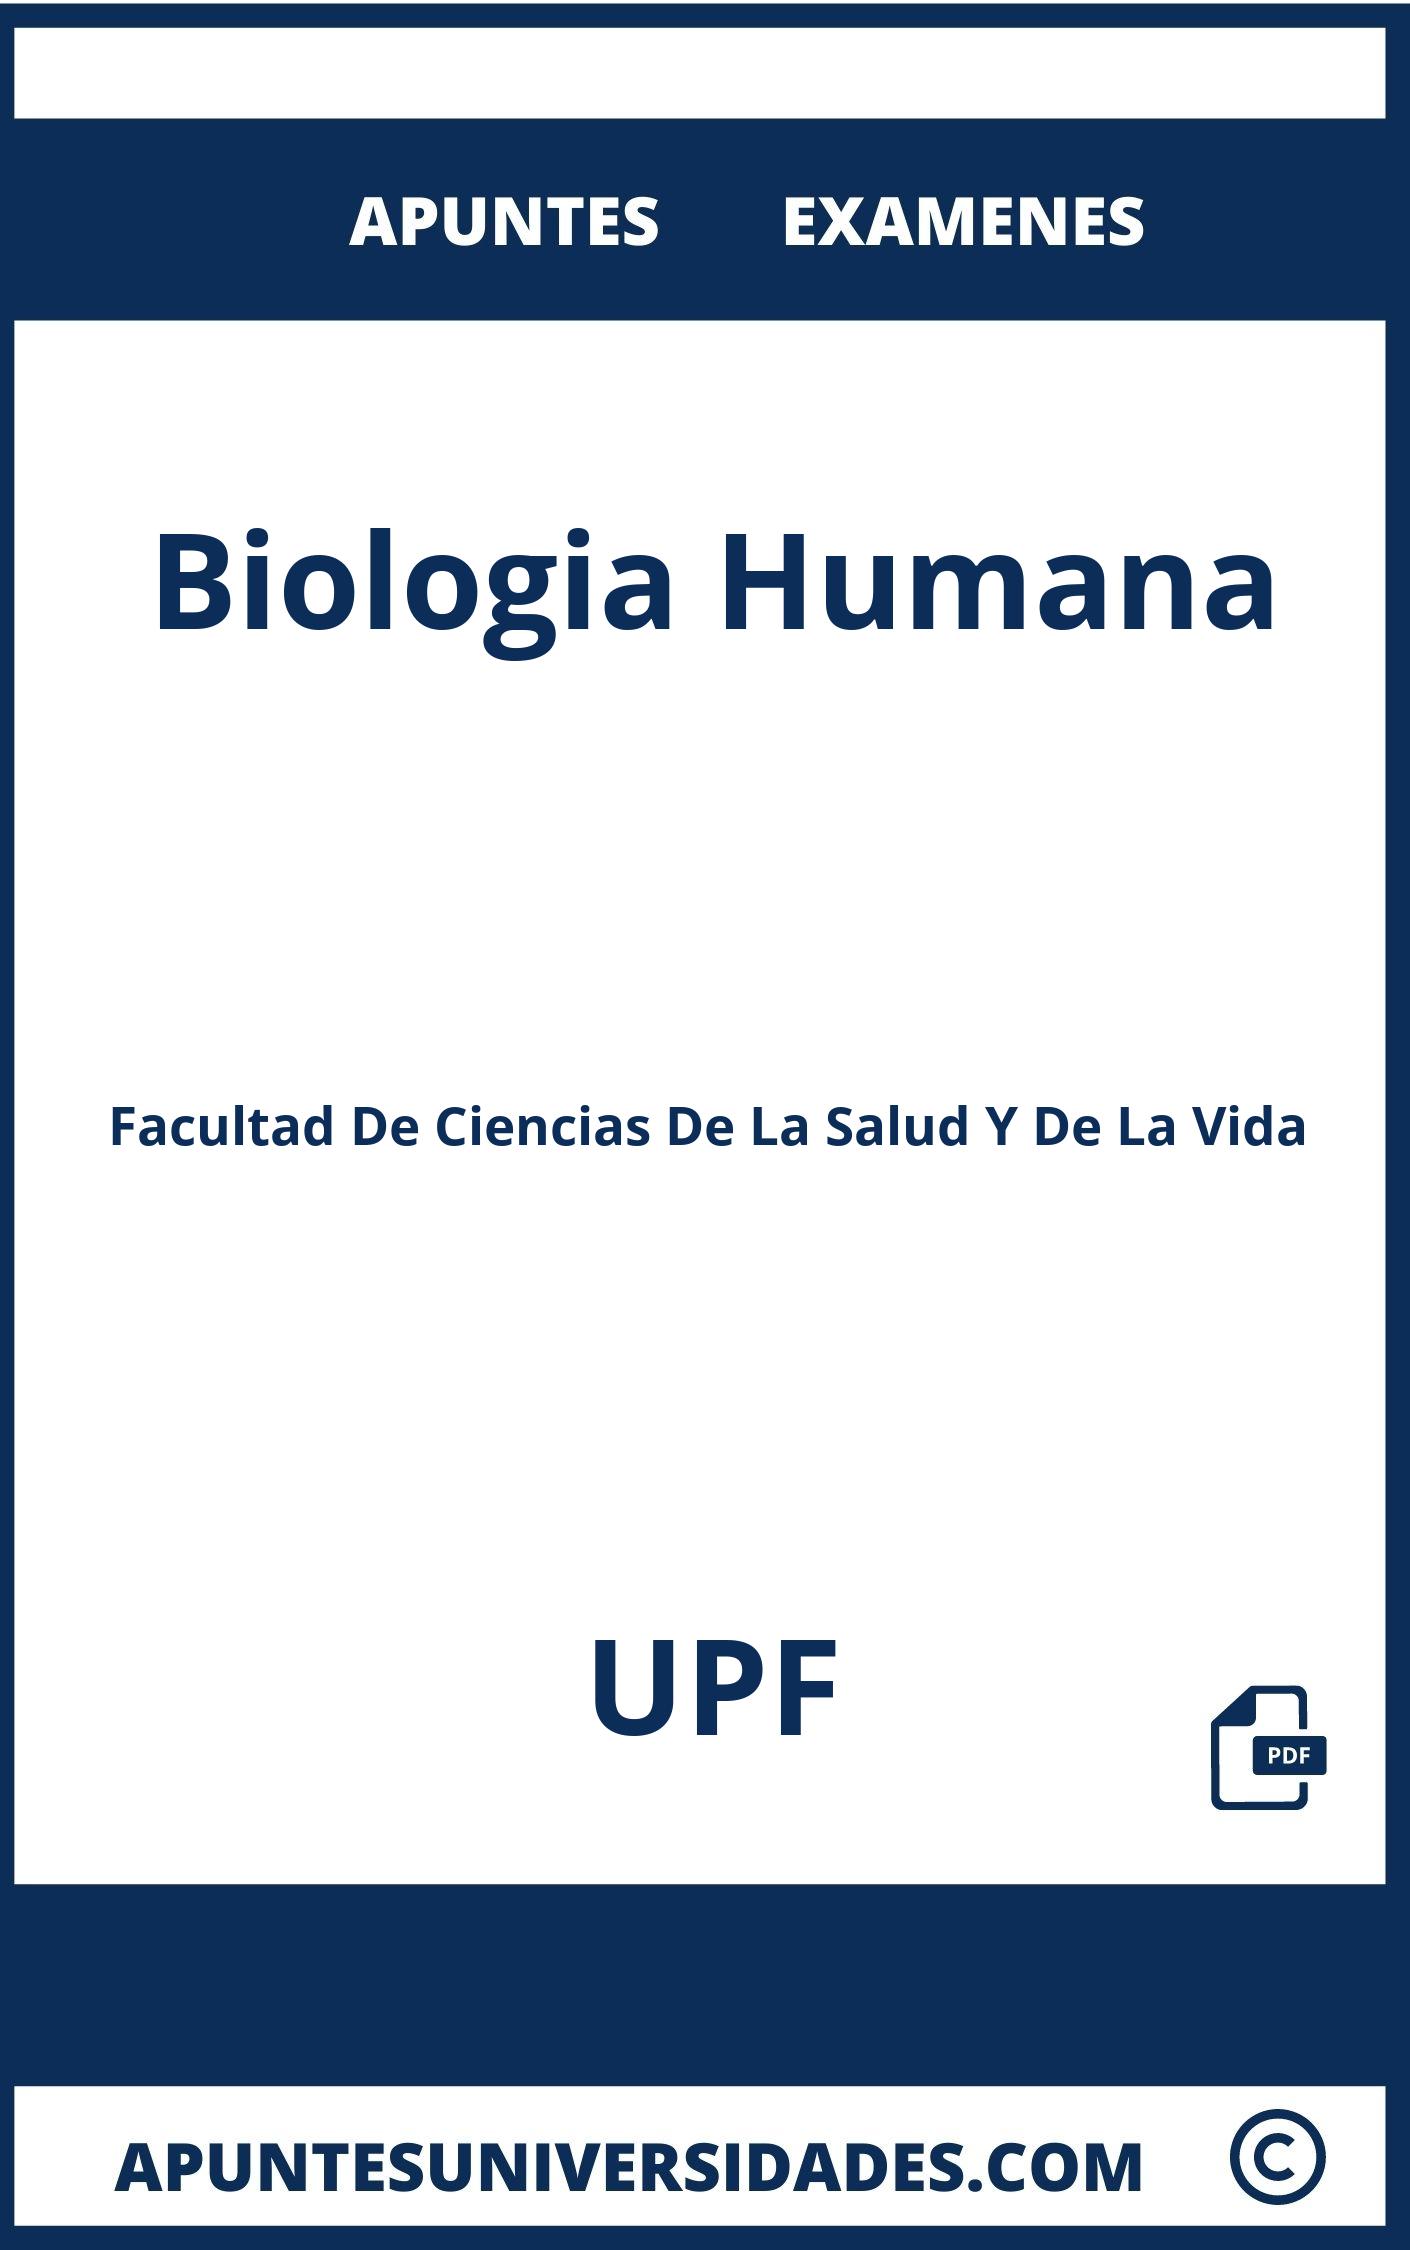 Apuntes y Examenes Biologia Humana UPF